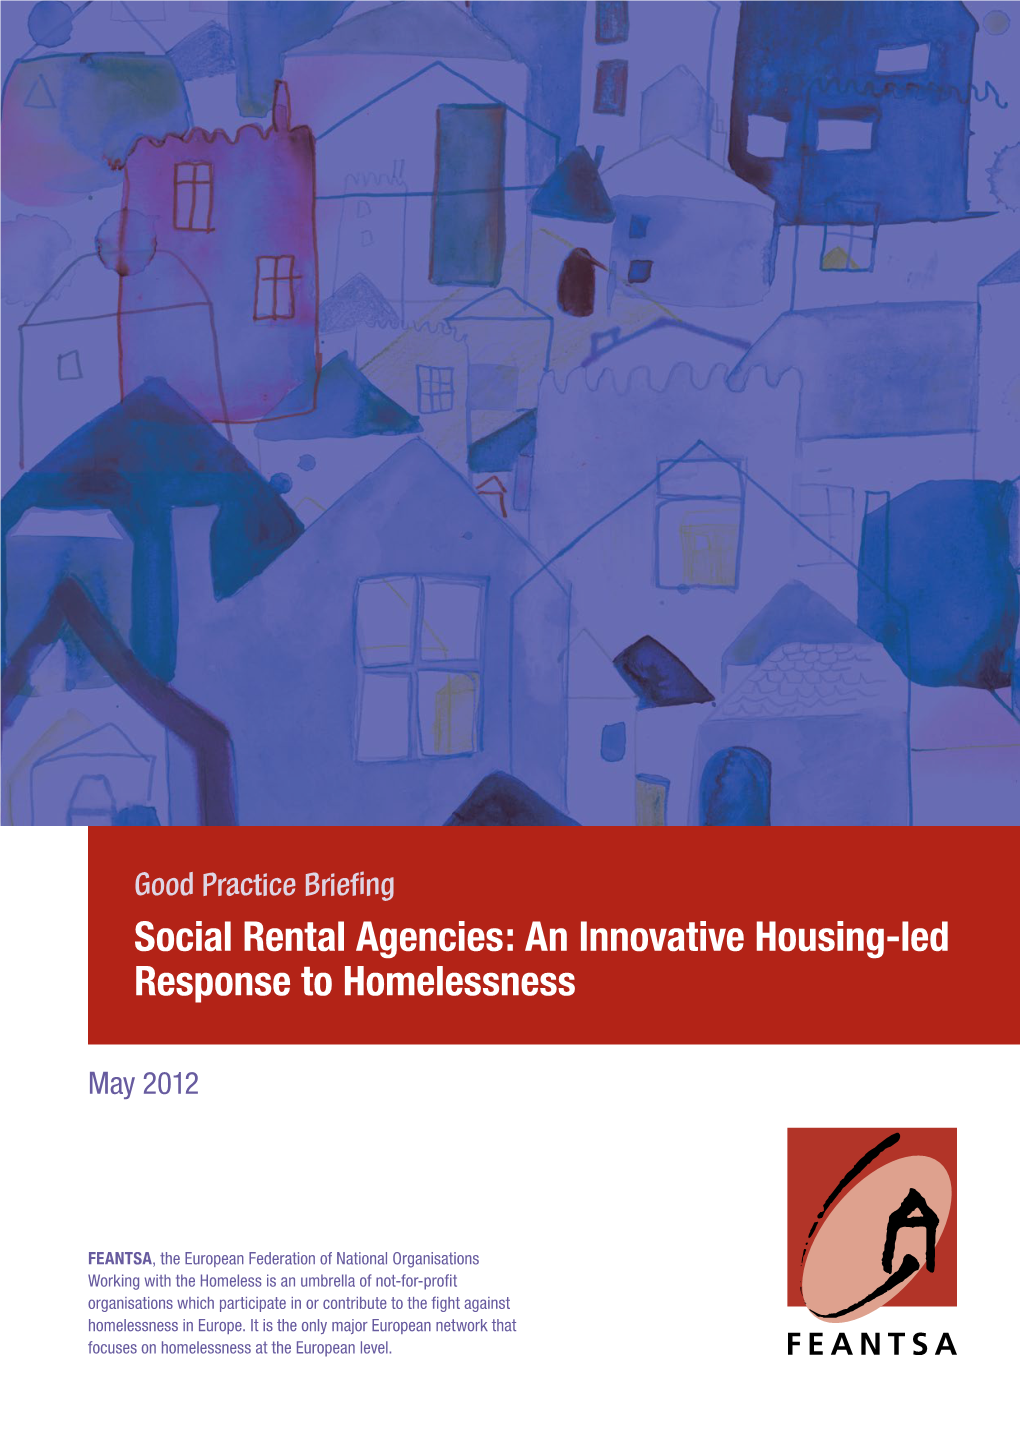 Social Rental Agencies: an Innovative Housing-Led Response to Homelessness